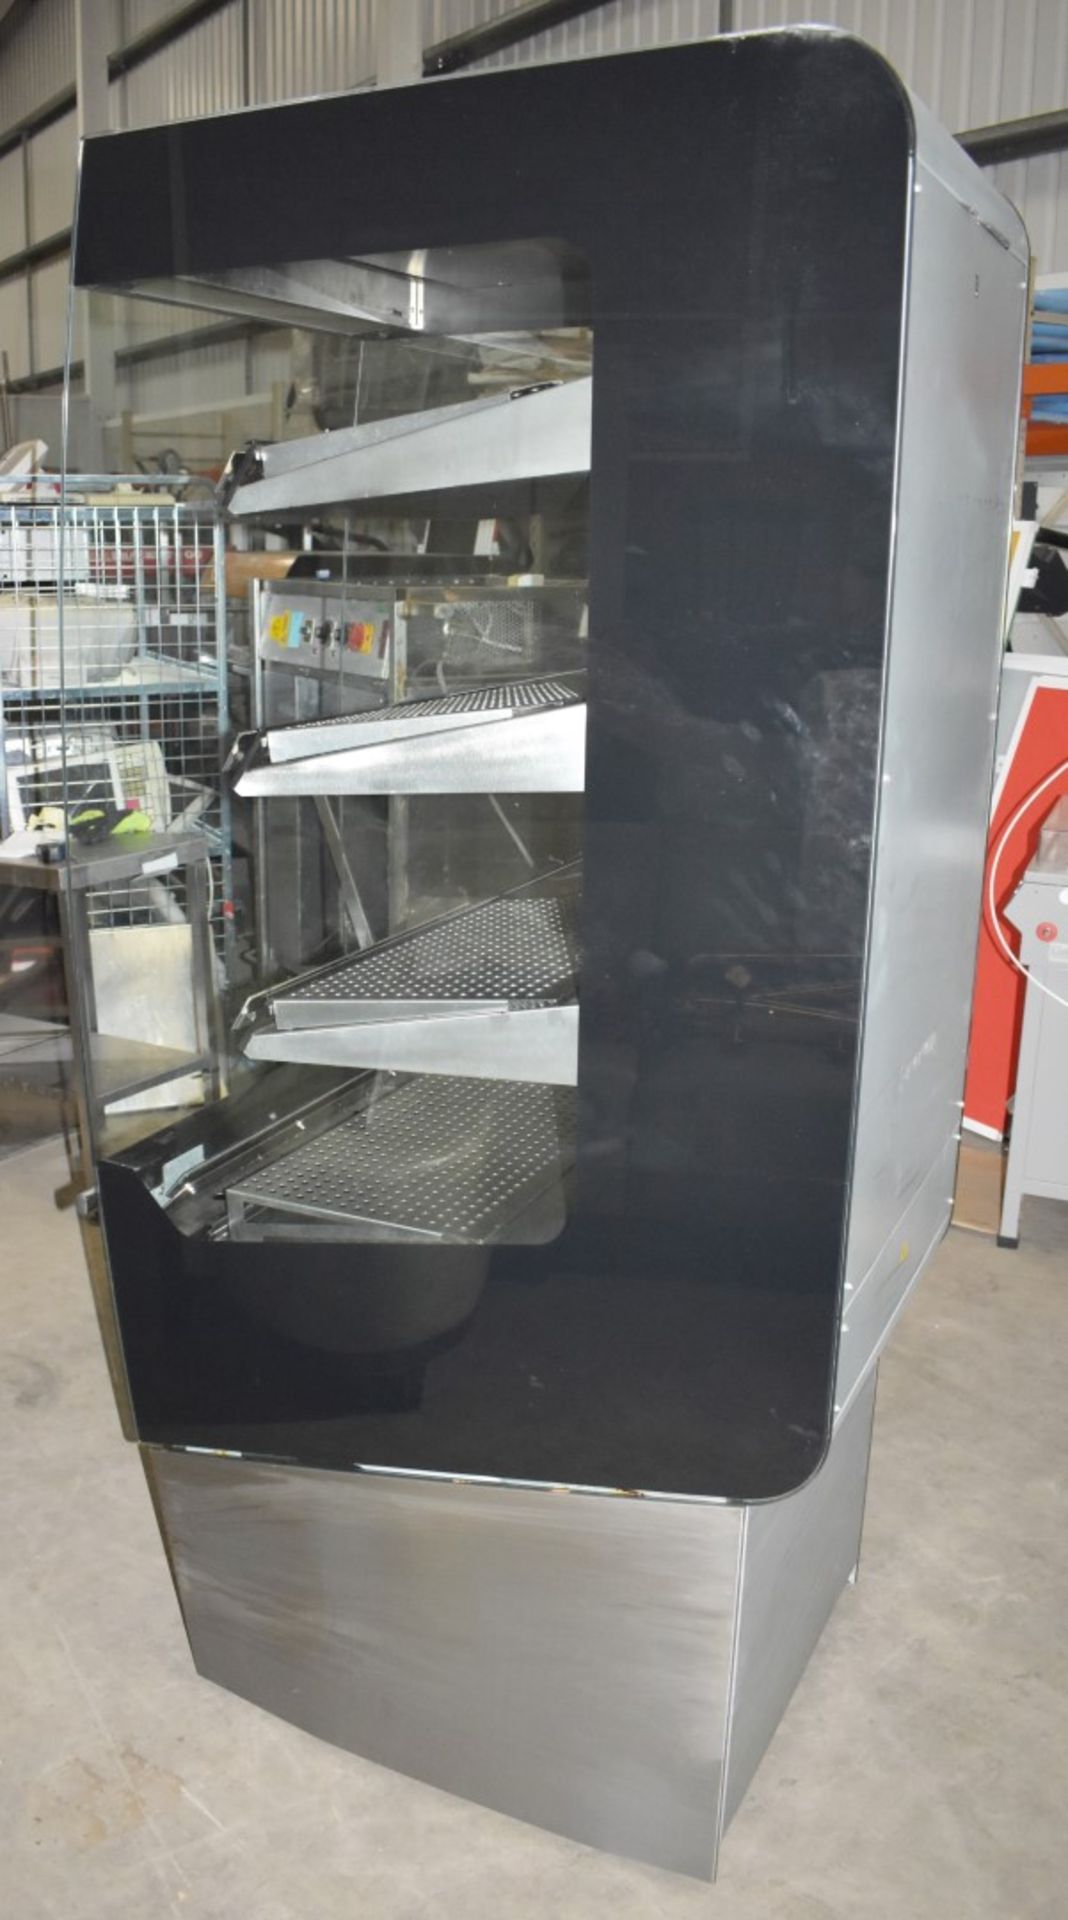 1 x Fri-Jado Four Tier Multi Deck Hot Food Warmer Heated Display Unit - Model MD60 - Contemporary - Image 8 of 12